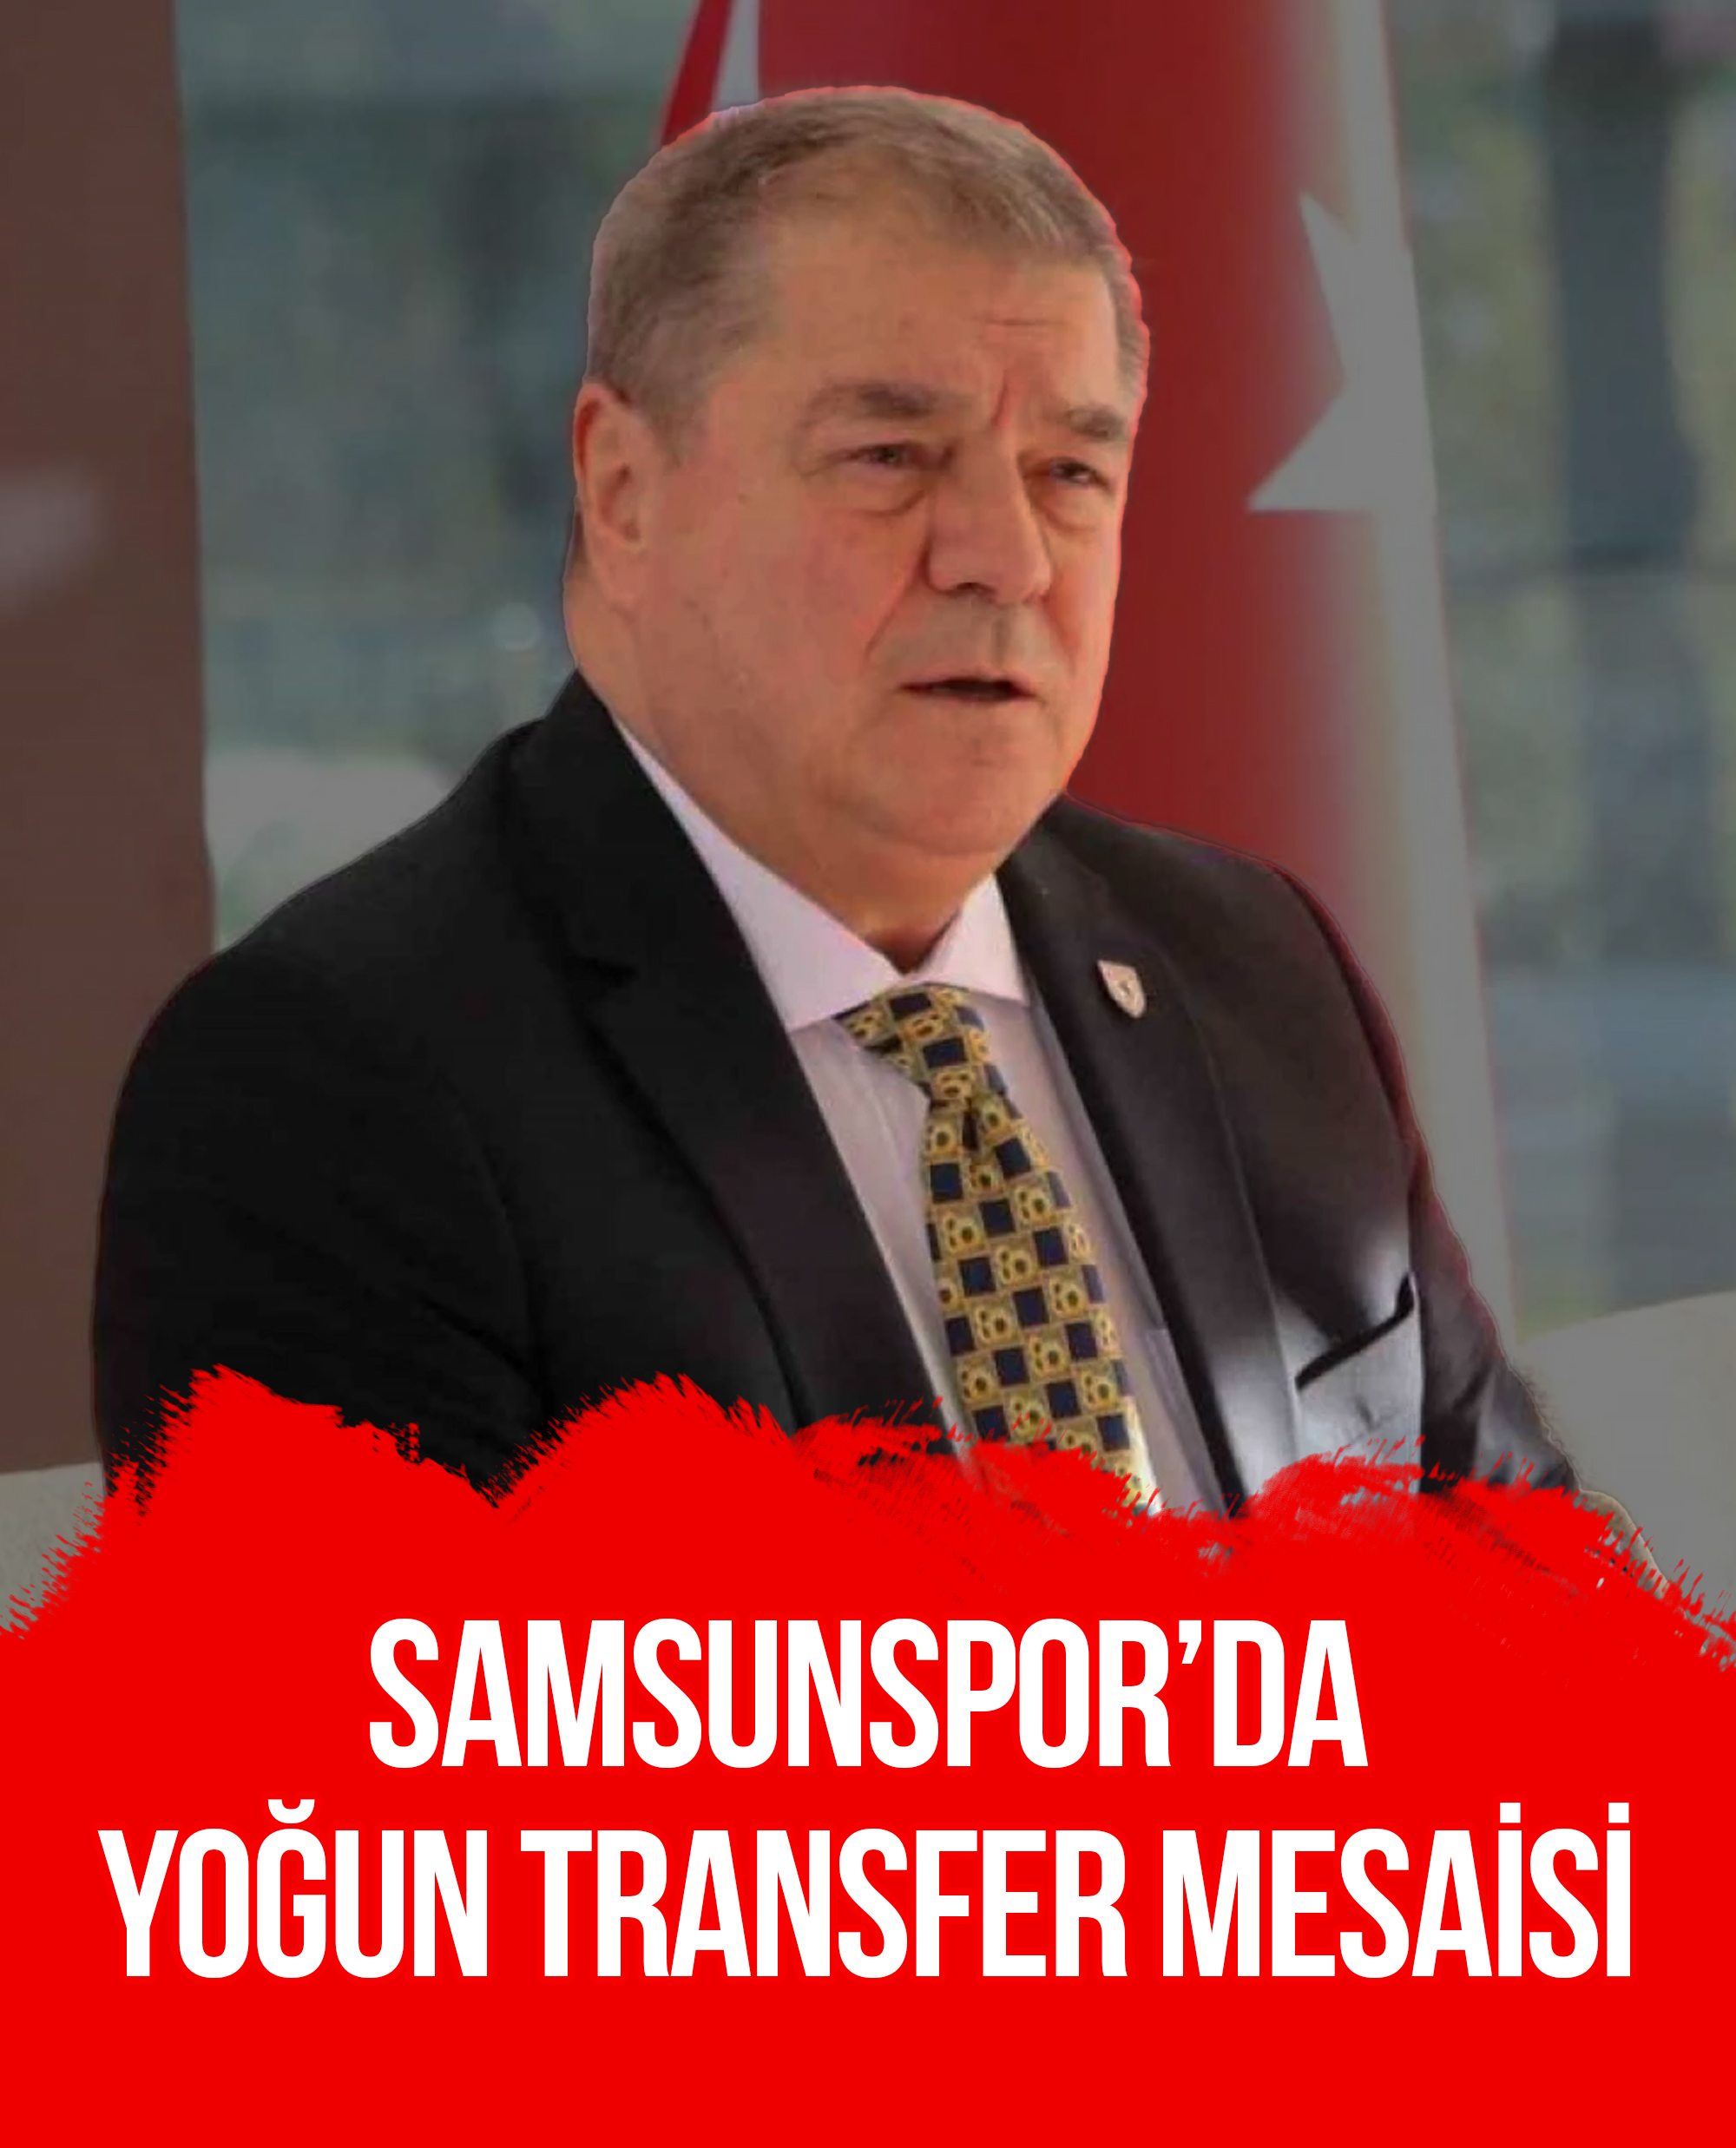 Samsunspor'da yoğun transfer mesaisi